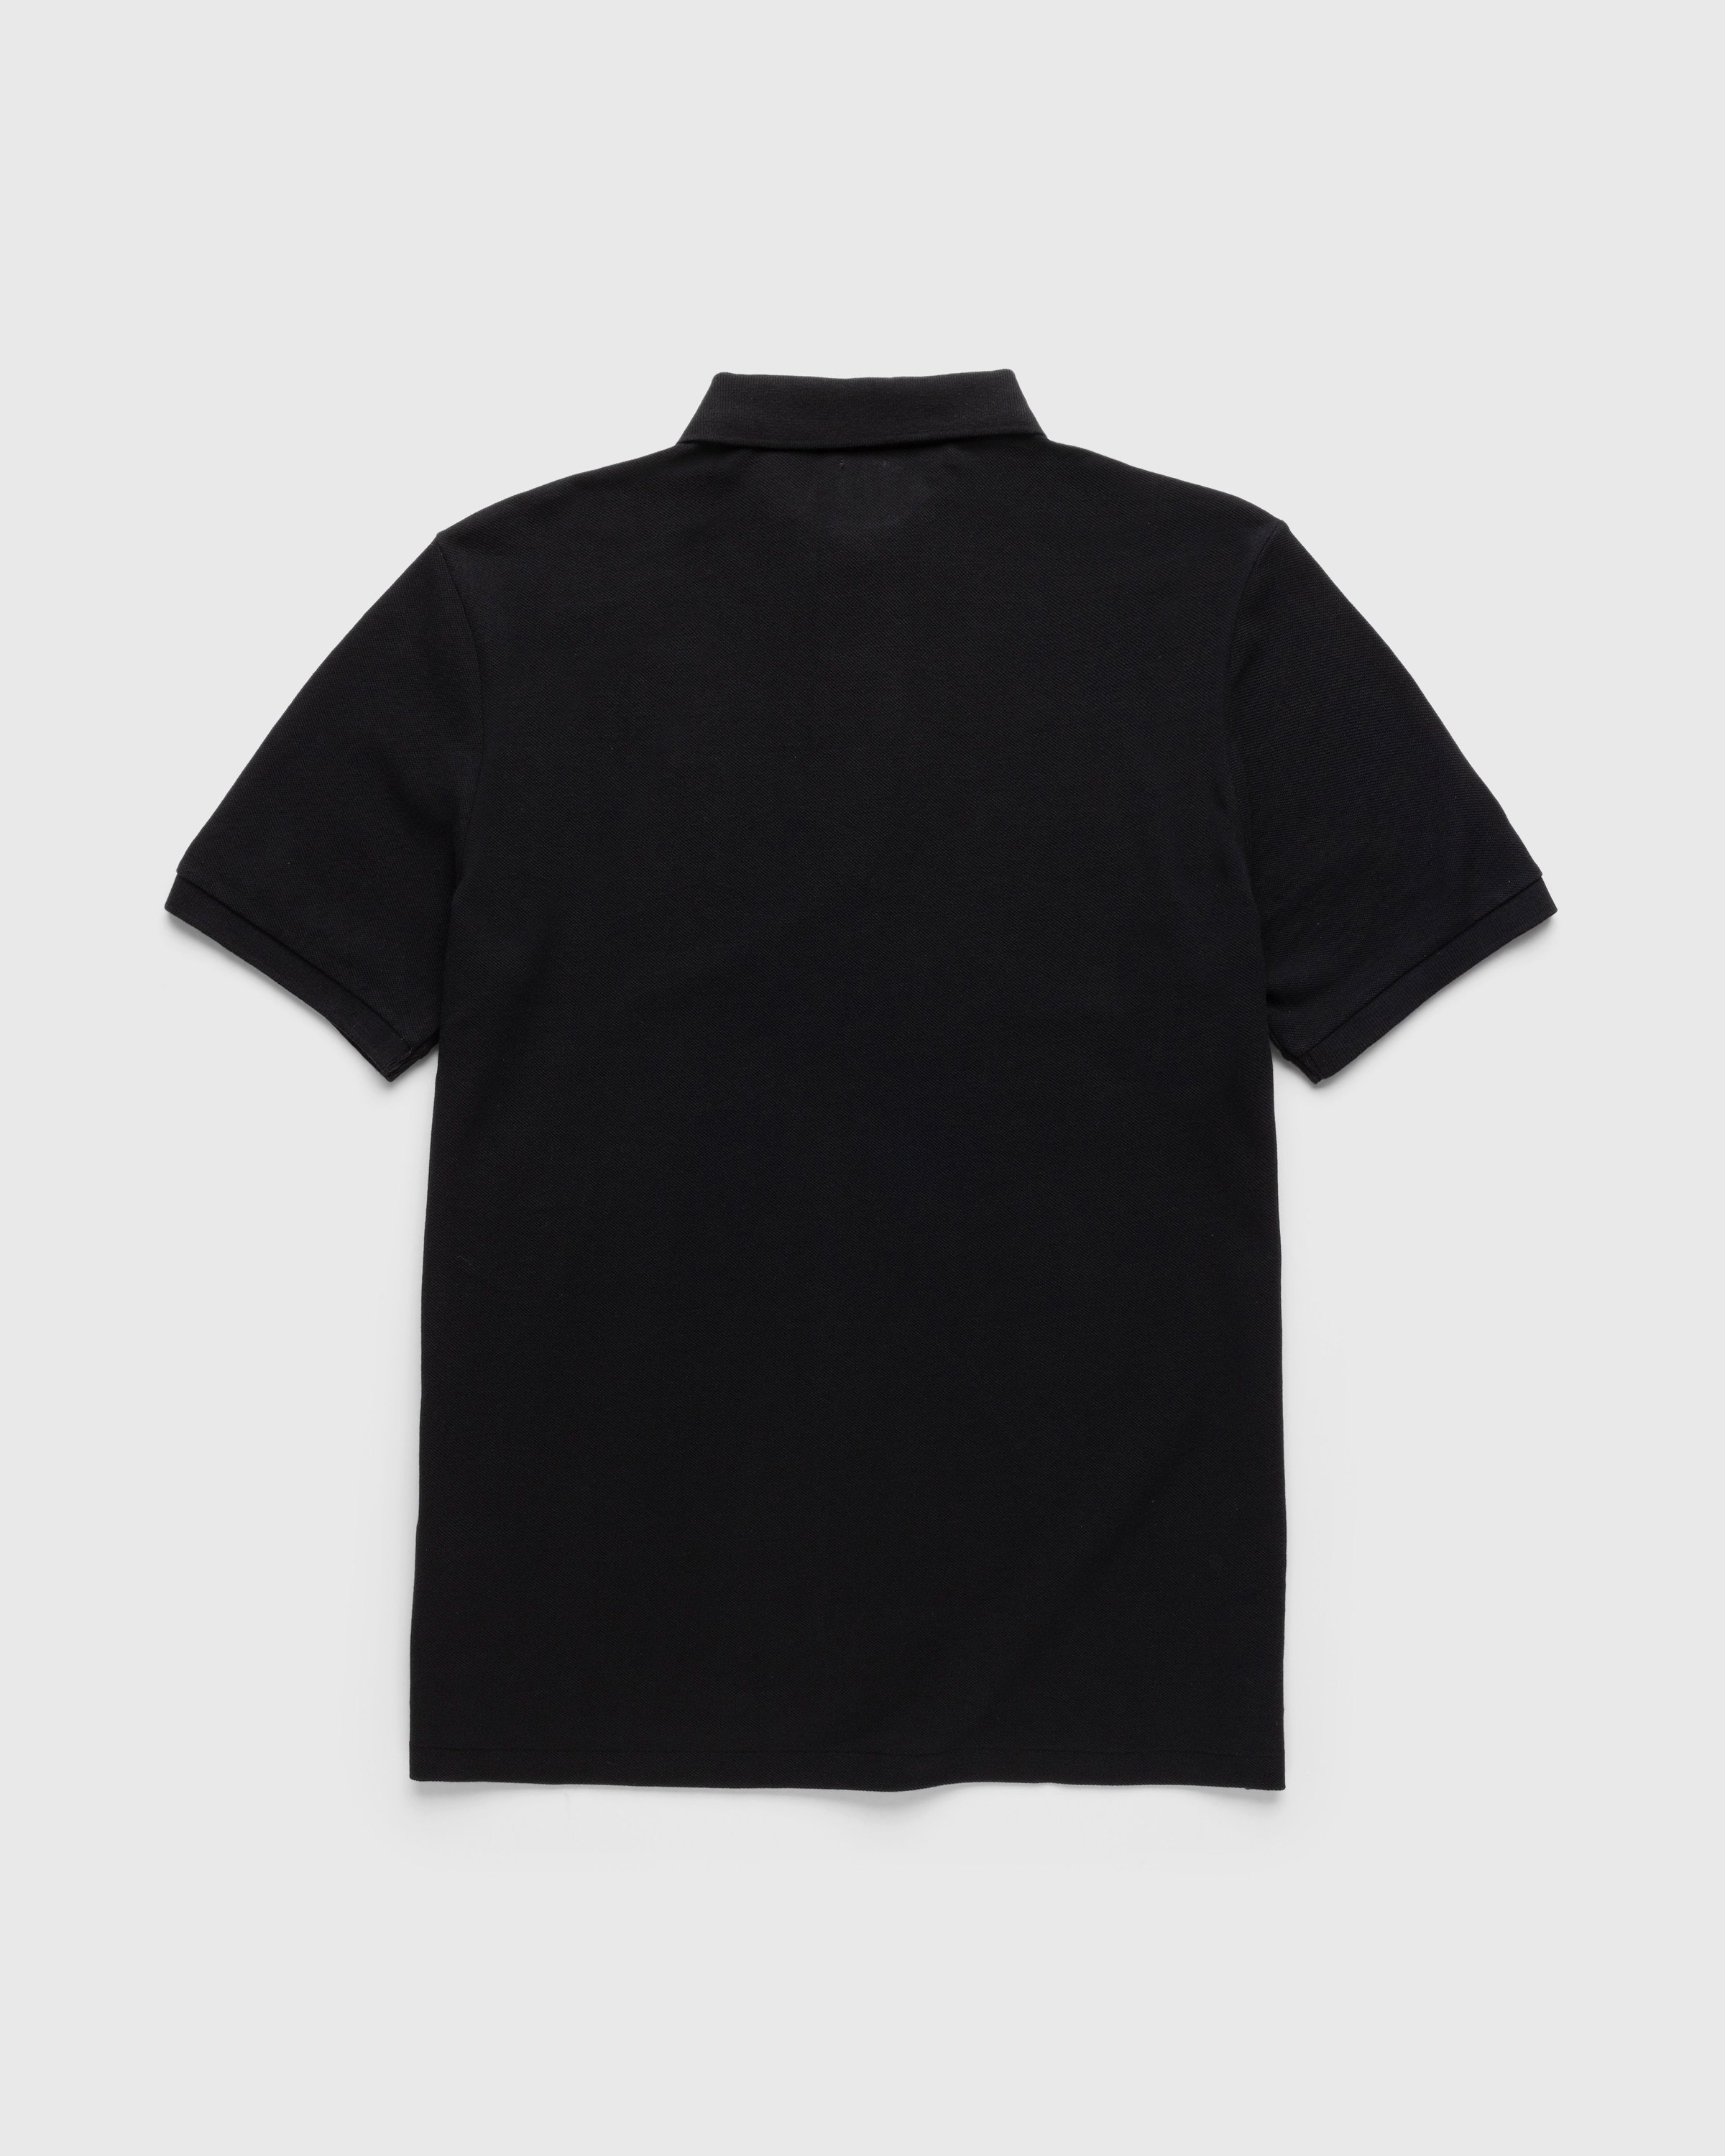 Ralph Lauren x Fortnite - Short Sleeve Polo Shirt Black - Clothing - Black - Image 2